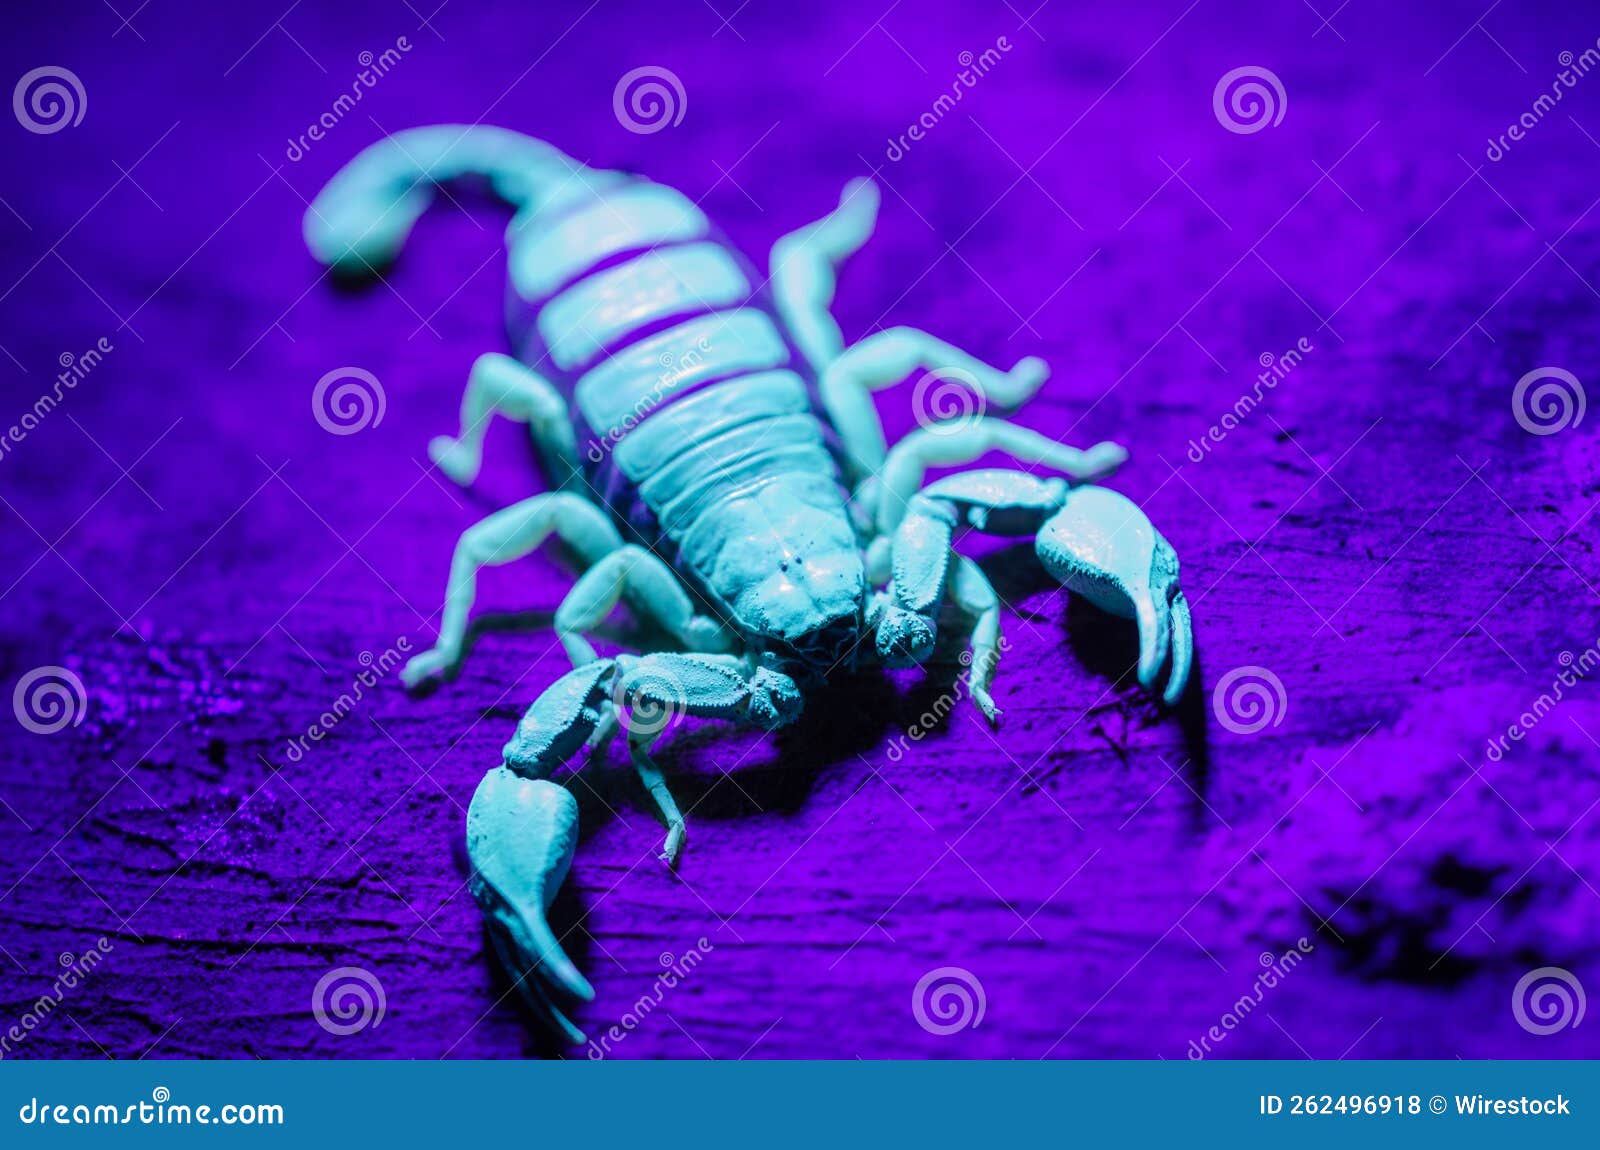 black scorpion close-up with uv light